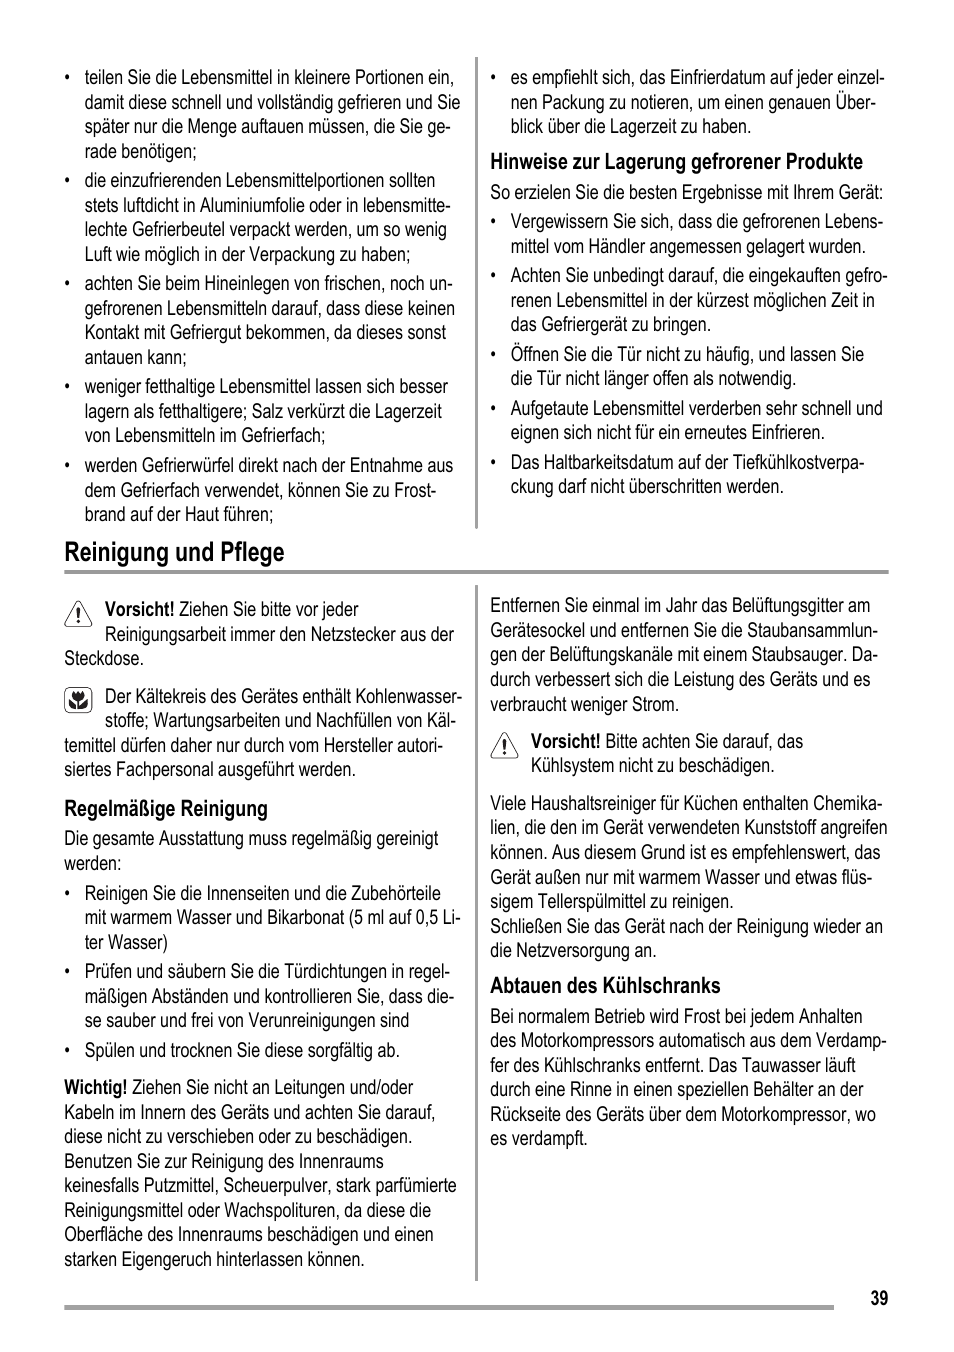 Reinigung und pflege | ZANKER KBU 12401 DK User Manual | Page 39 / 48